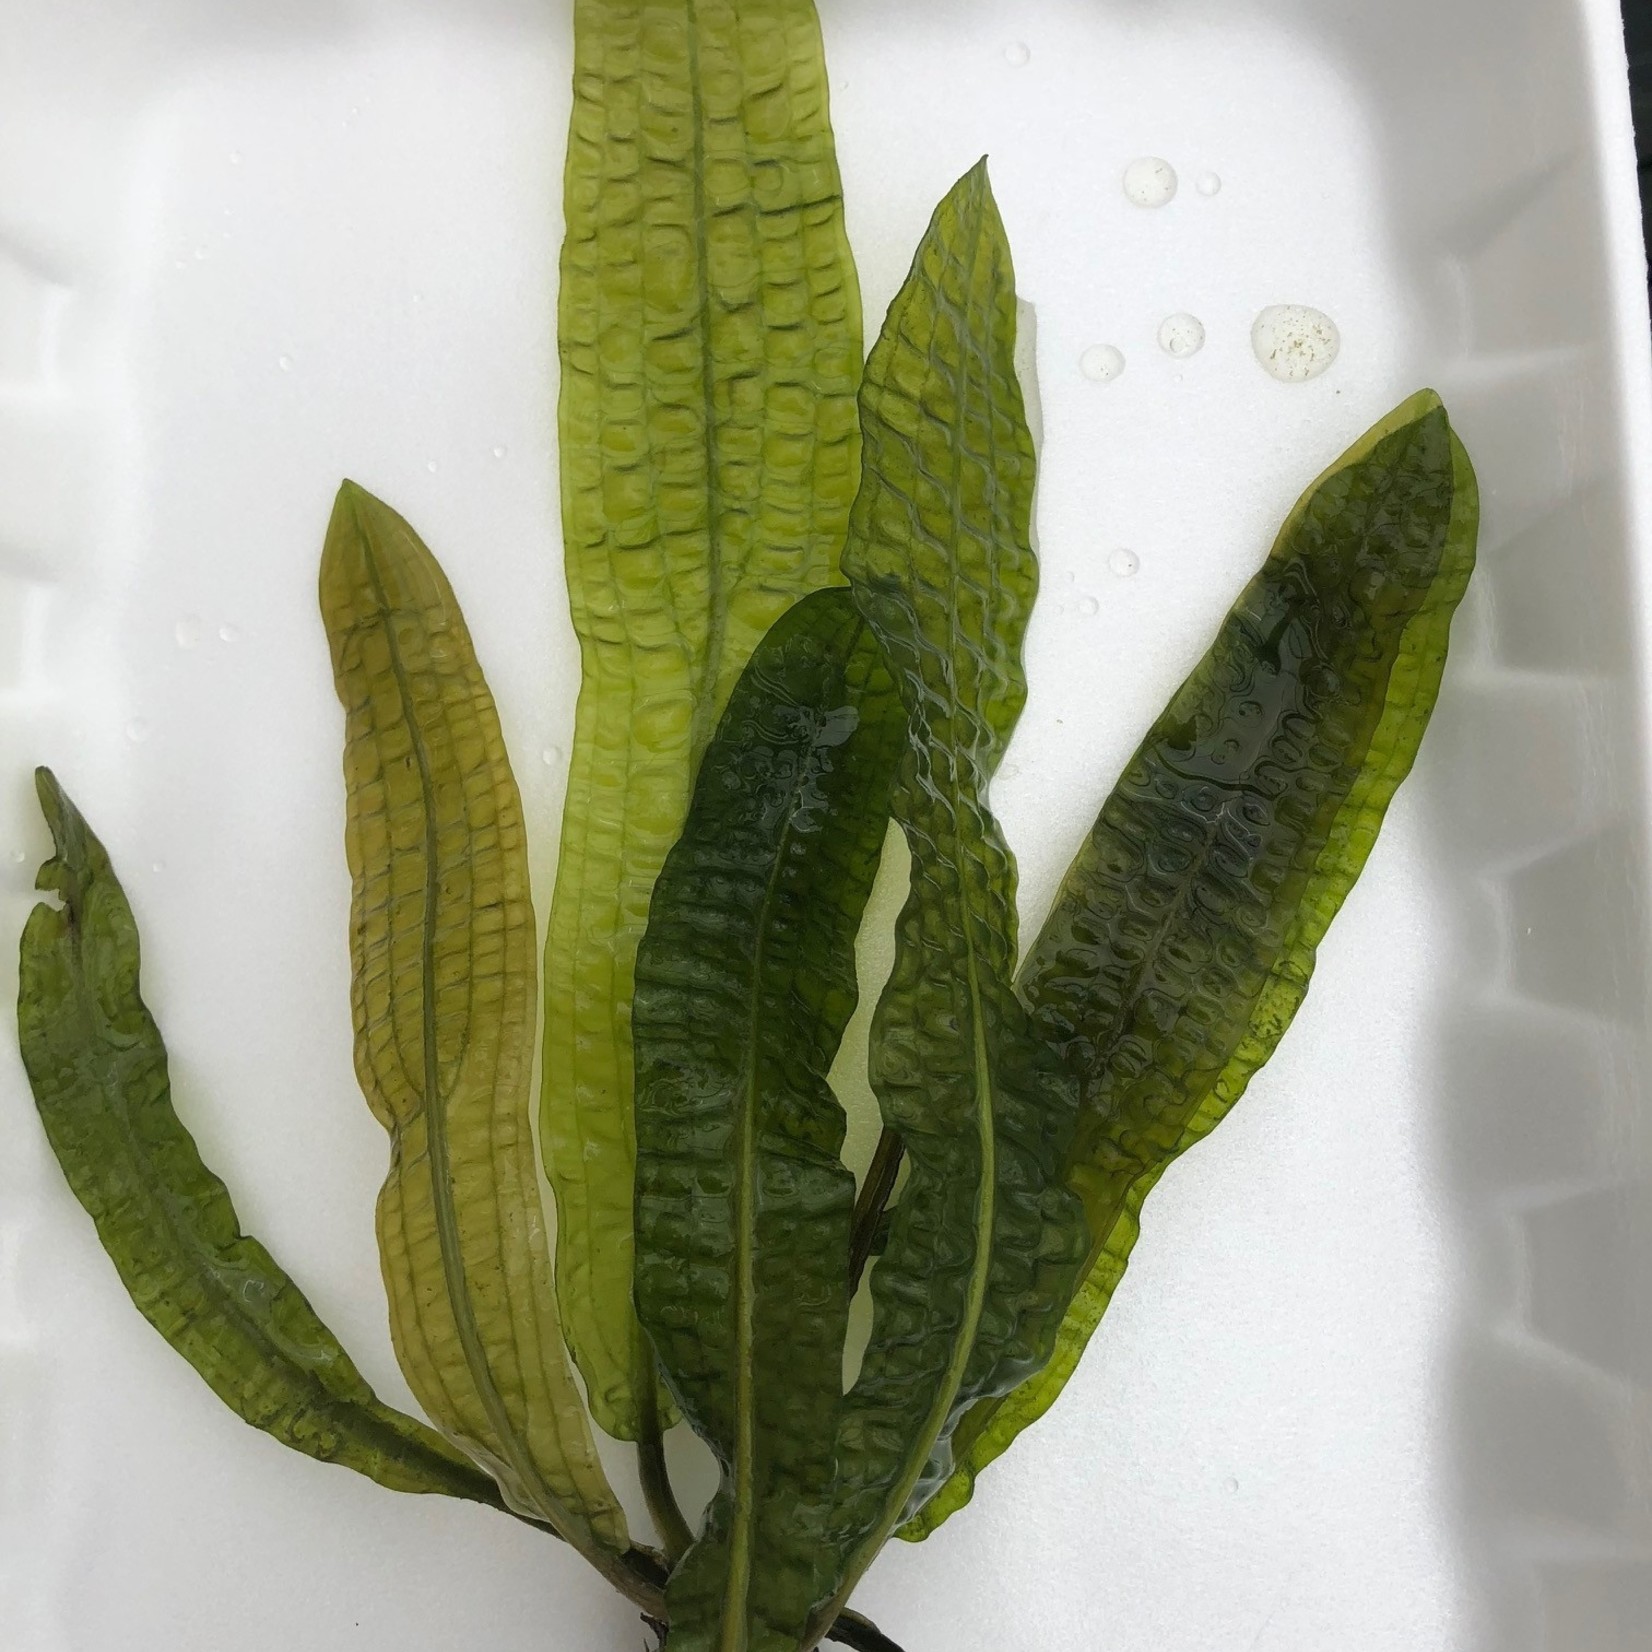 Bubba's Plants Aponogeton boivinianus bol